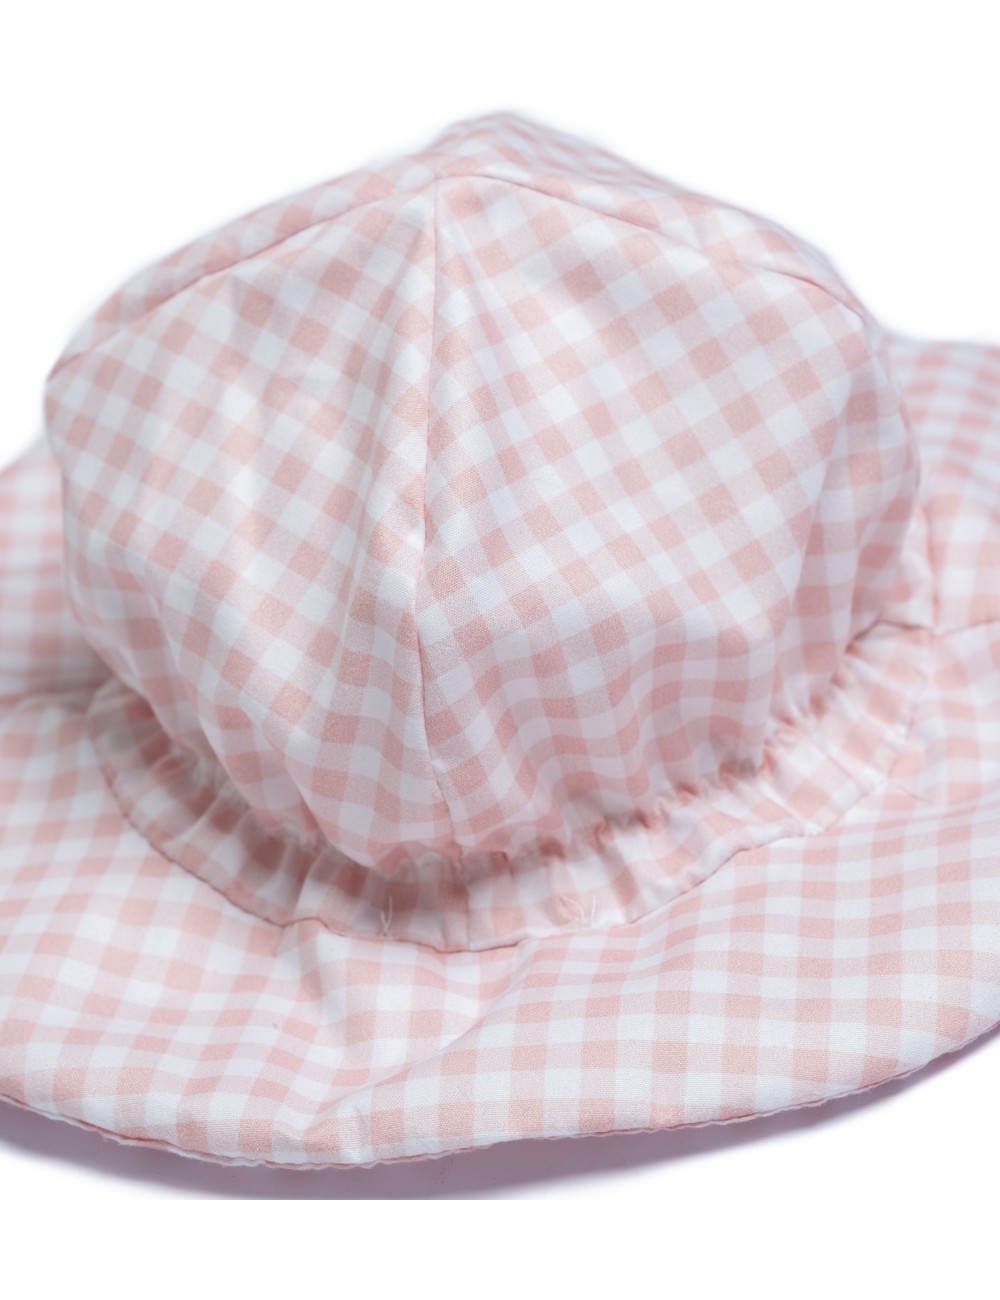 Tortue Βρεφικό Καπέλο Αντηλιακής Προστασίας S4-268-020 Lamoda.gr